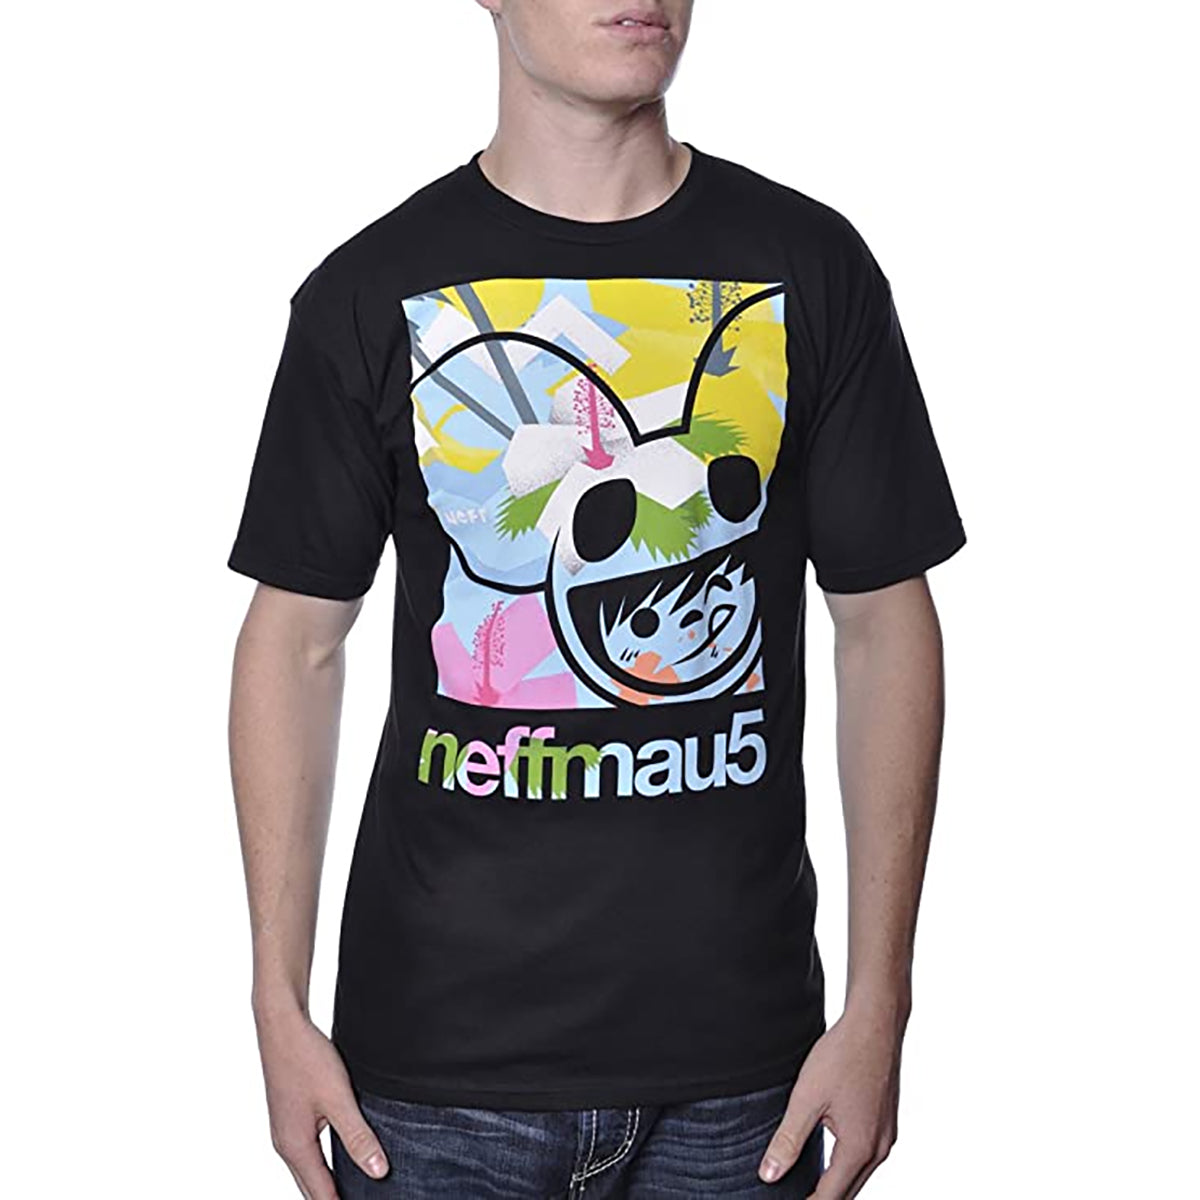 Neff Beachmau5 Men's Short-Sleeve Shirts - Black